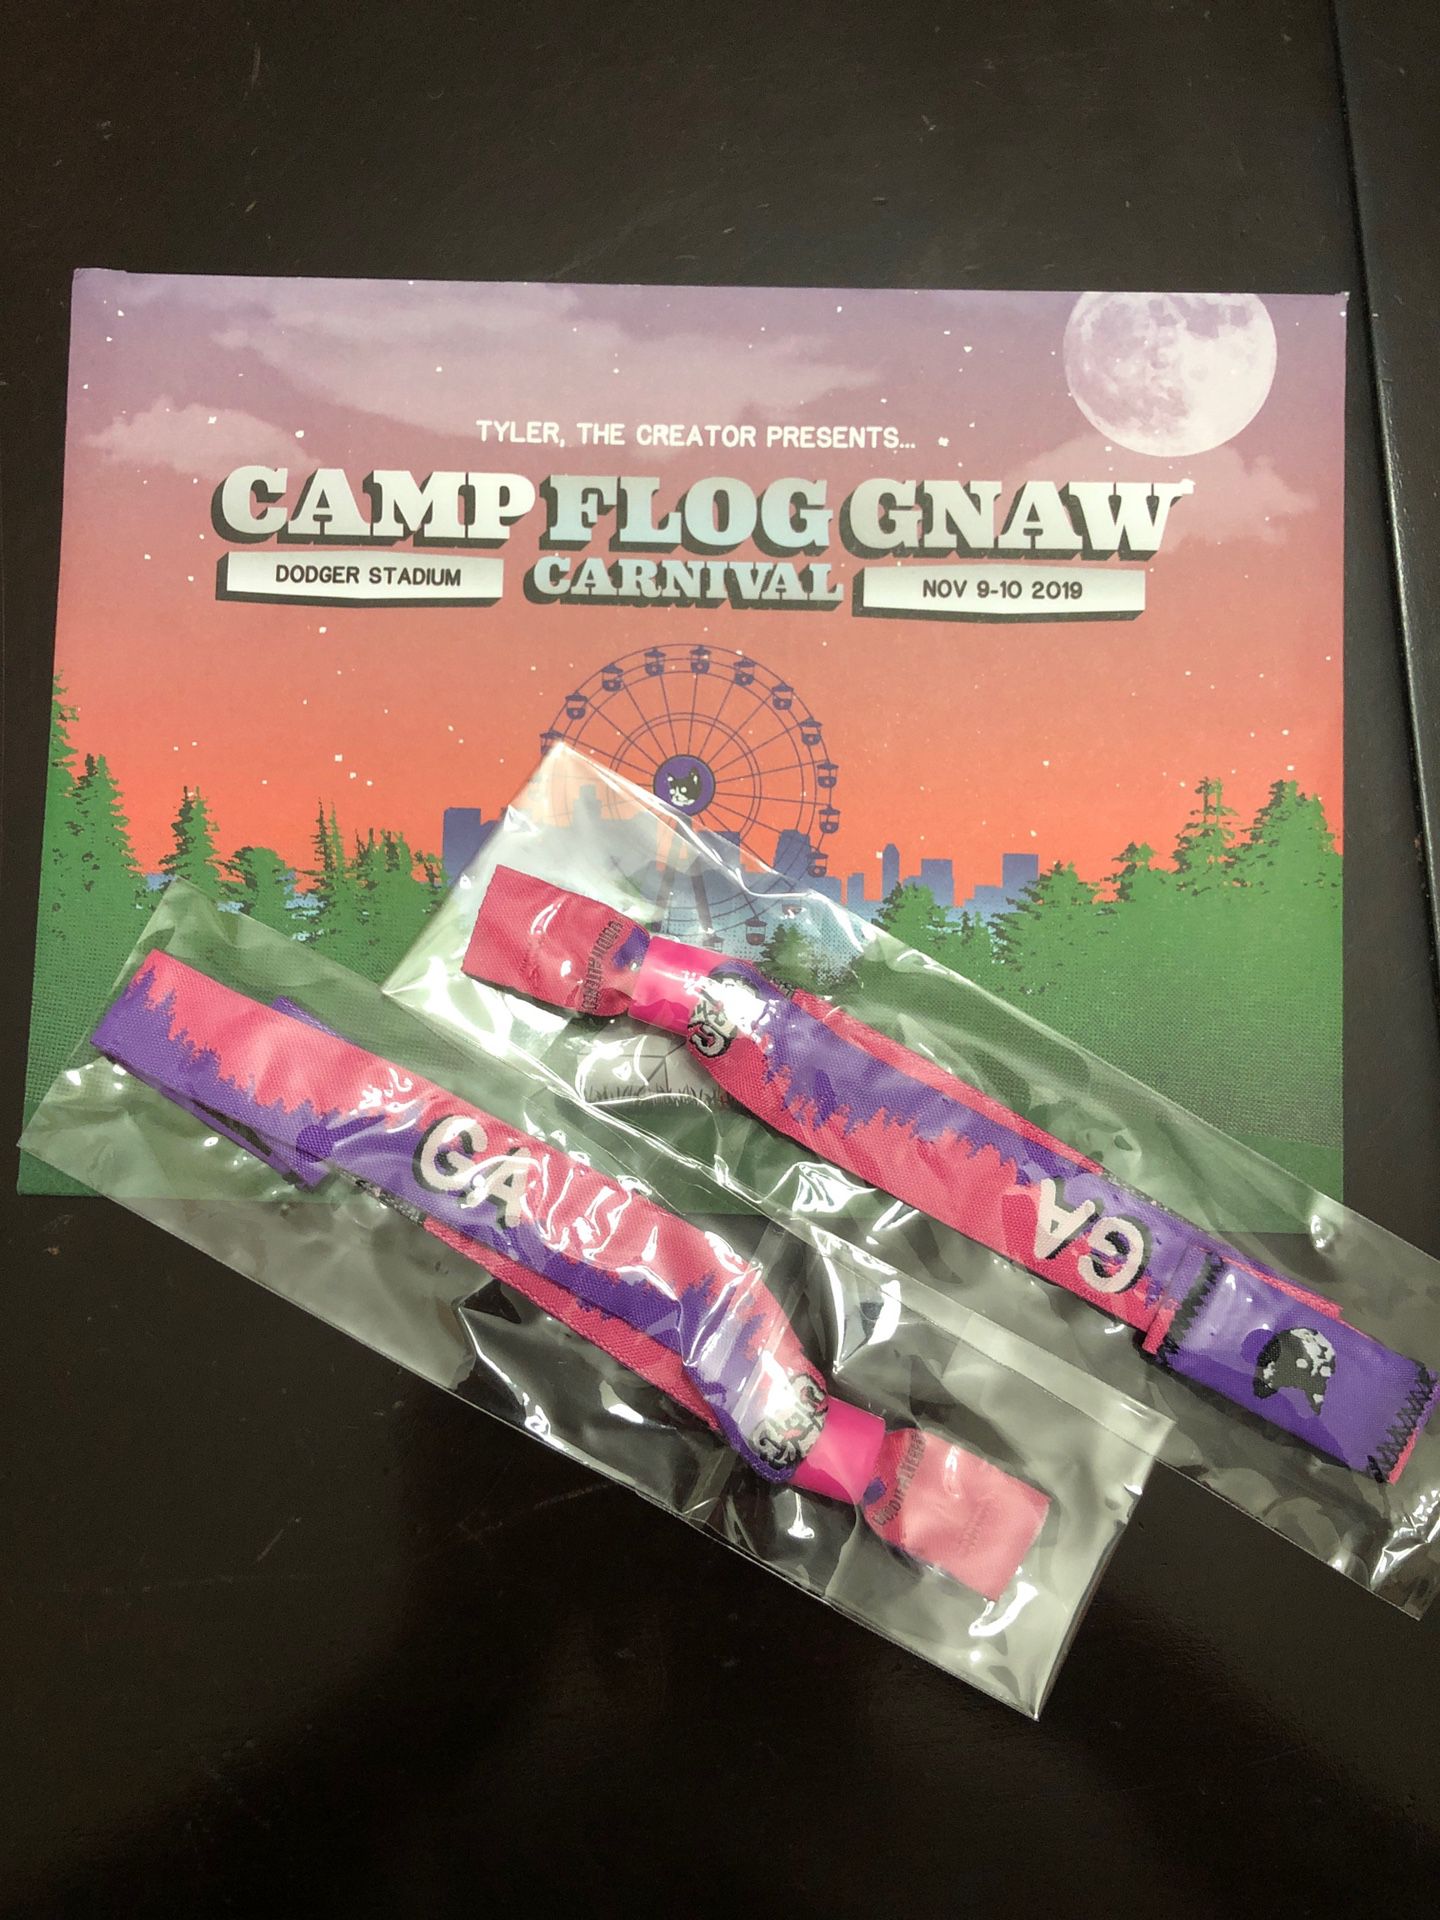 Camp flog gnaw tickets